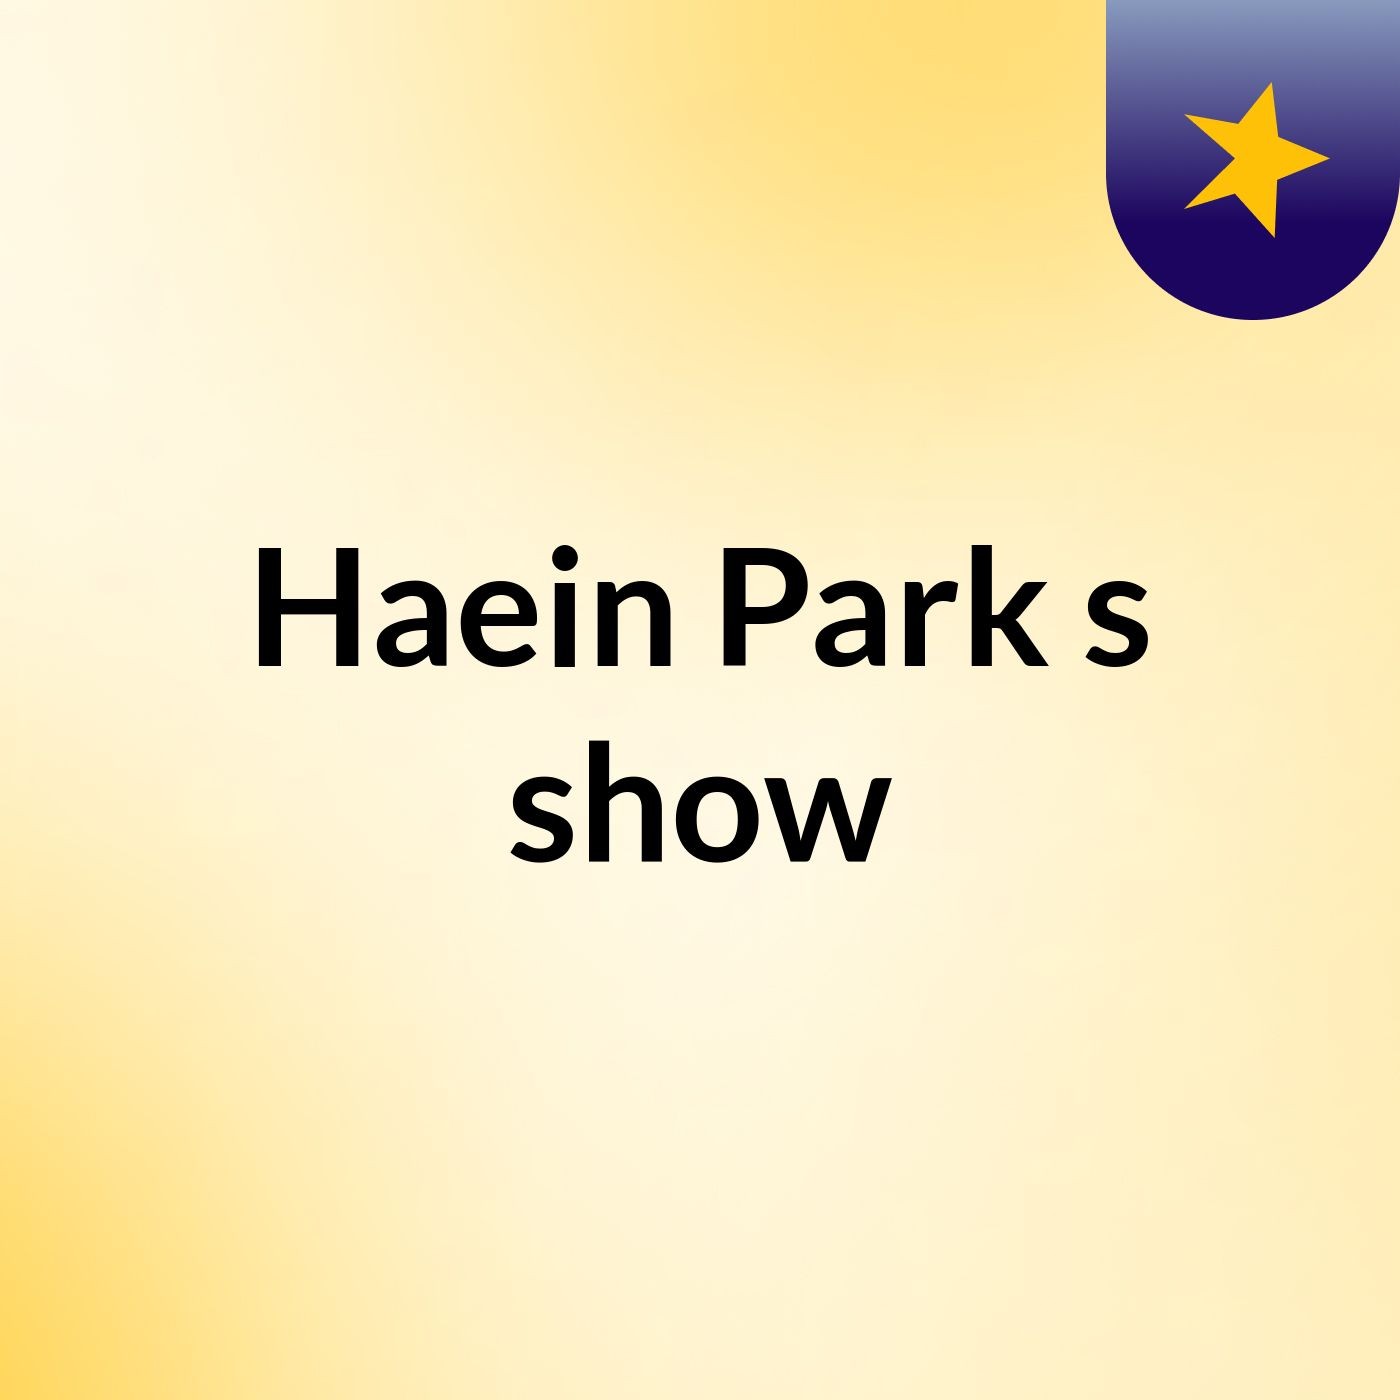 Haein Park's show